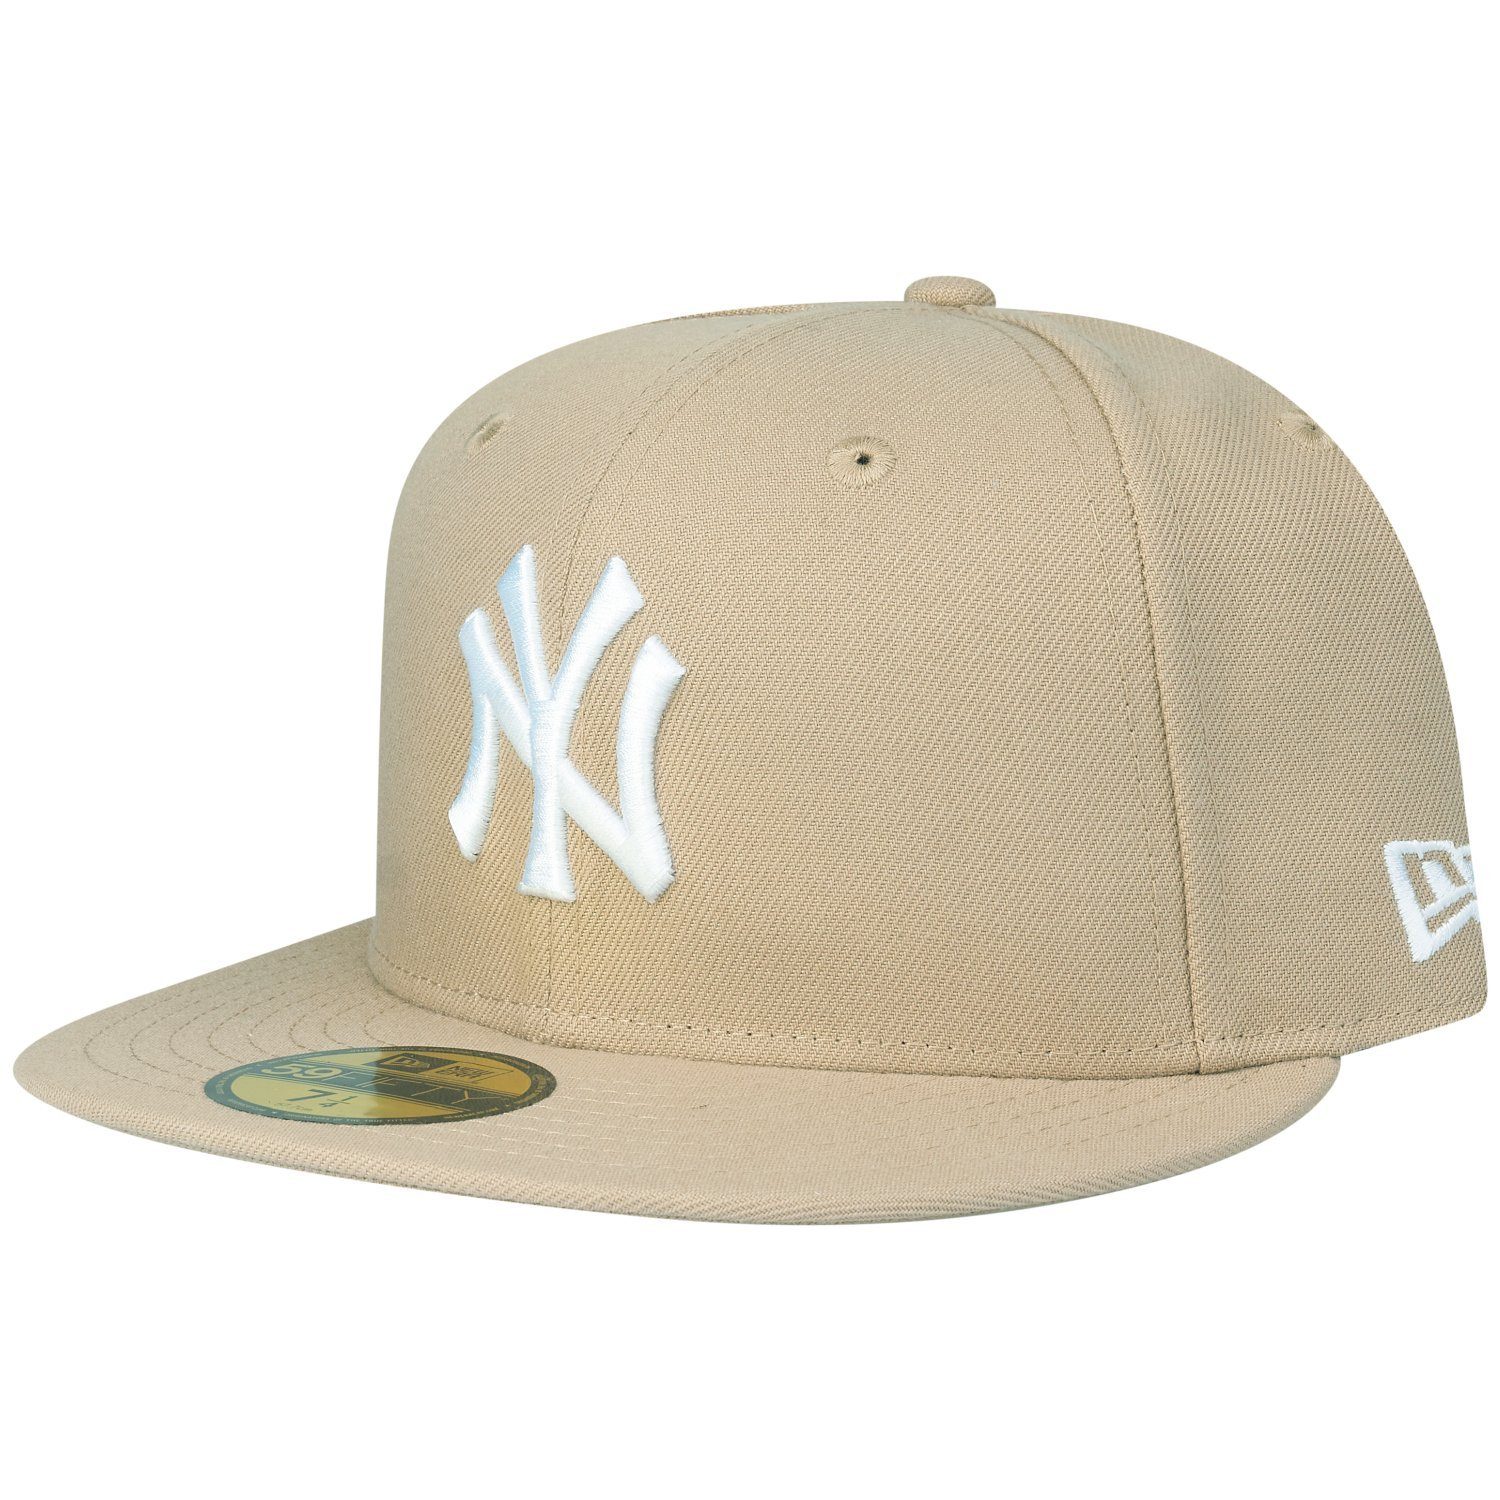 Super günstiger Verkauf New Era Fitted York New Yankees Cap 59Fifty